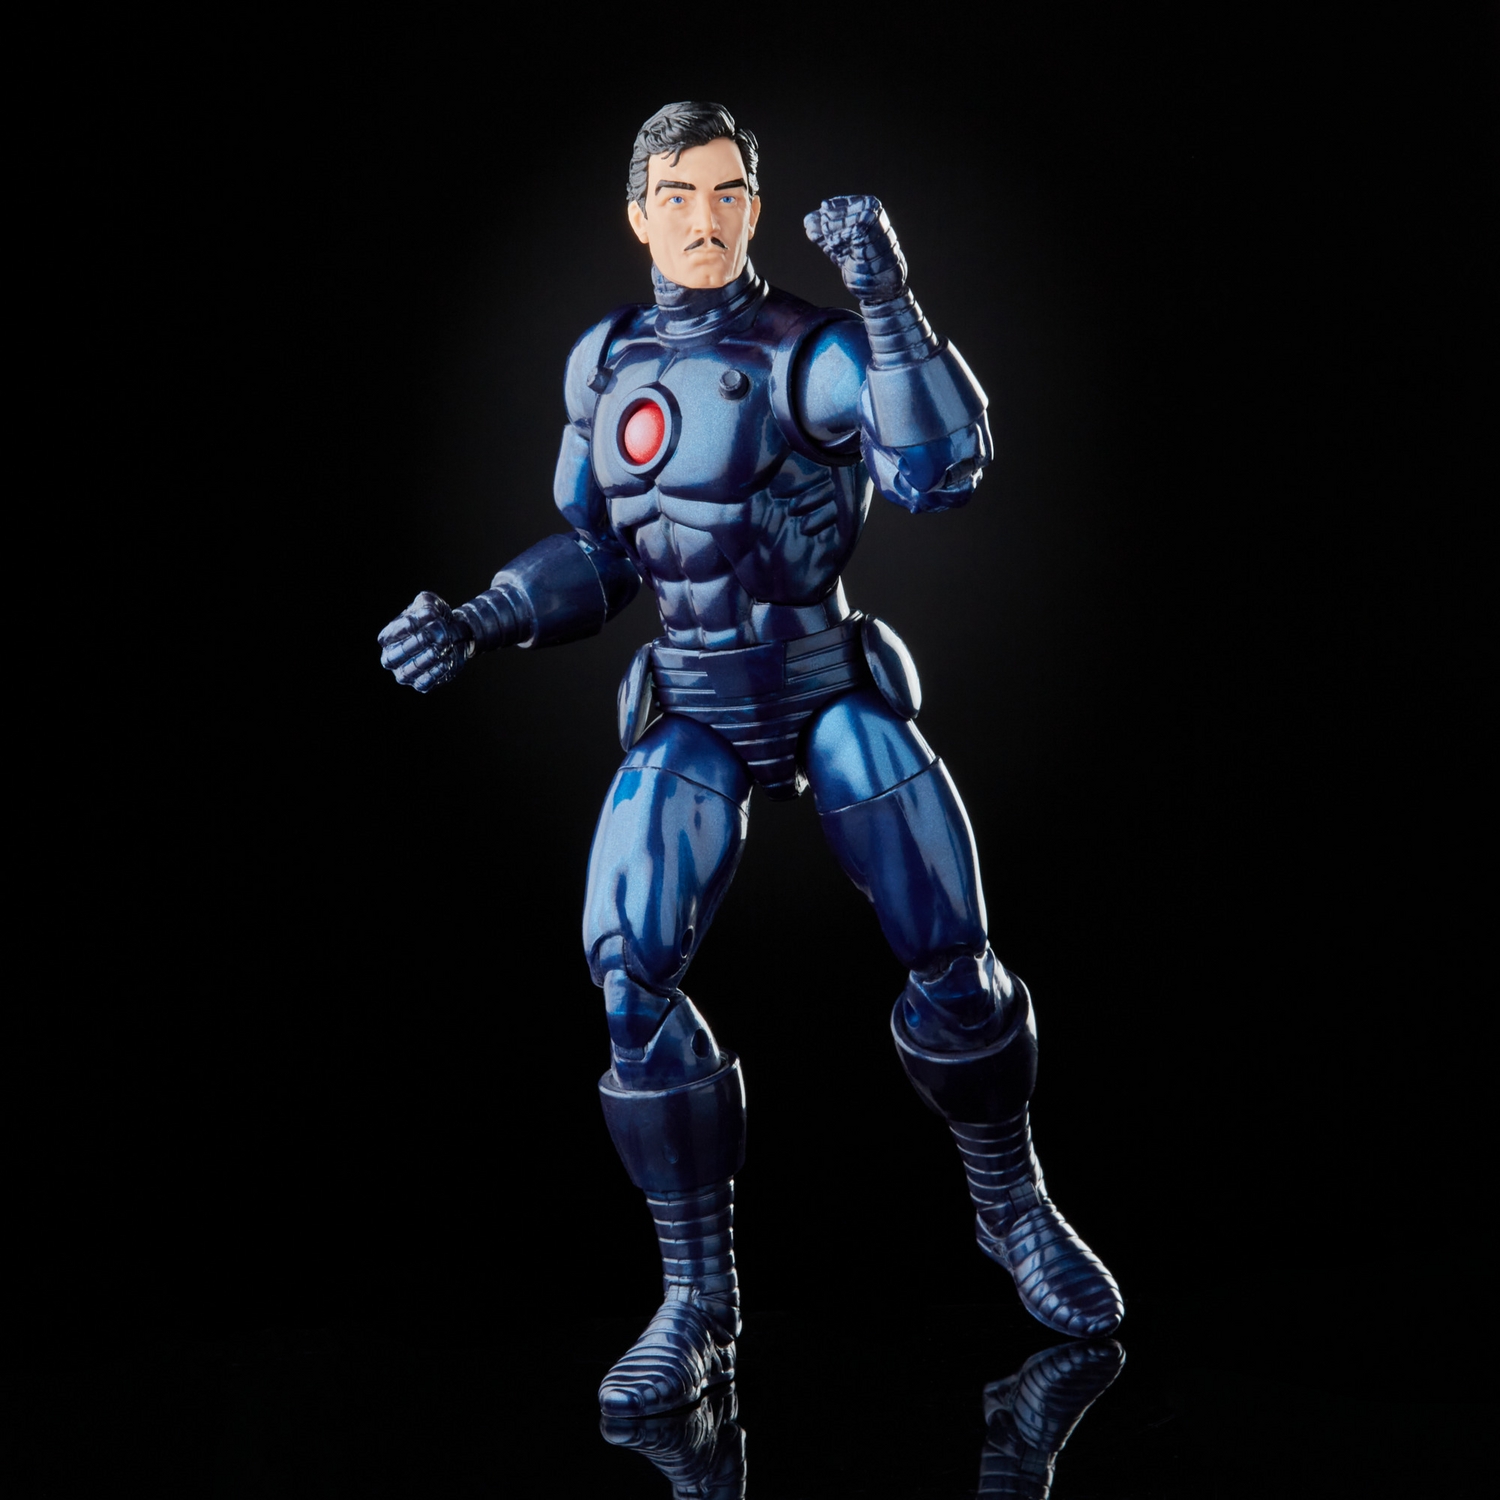 MARVEL LEGENDS SERIES 6-INCH IRON MAN Figure Assortment - Stealth Iron Man - oop (9).jpg